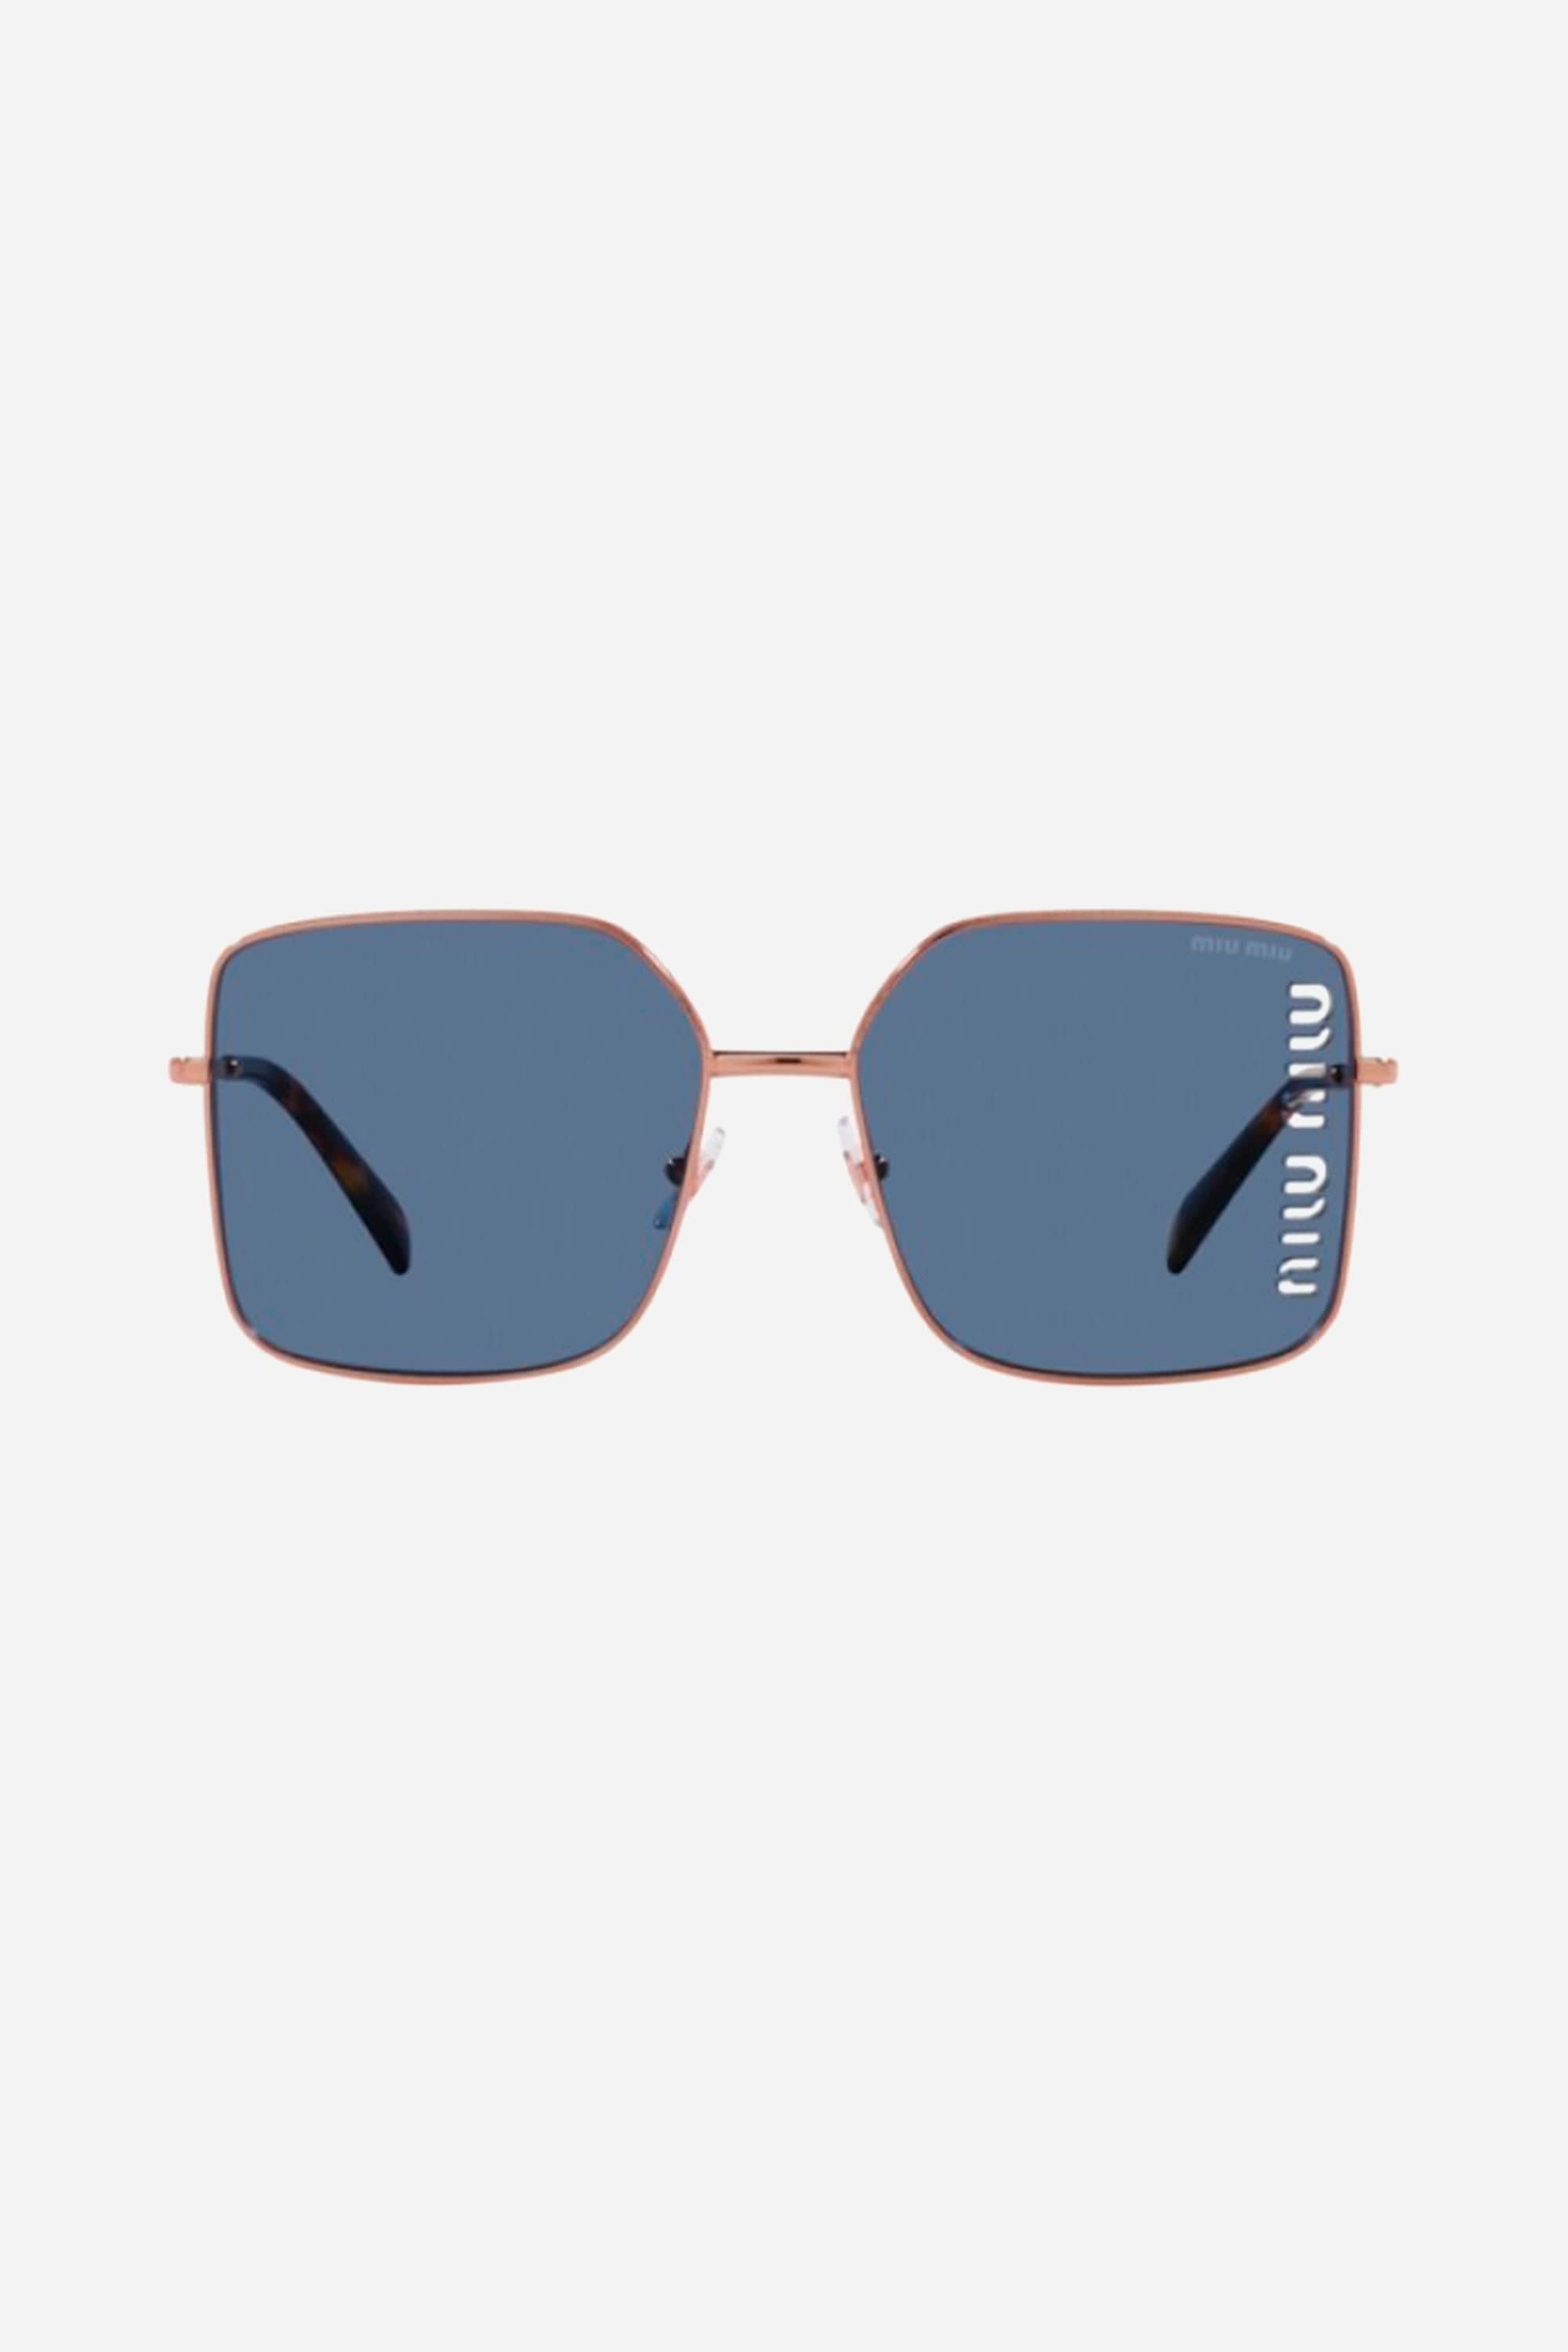 Miu Miu squared metal sunglasses with dark blue mirror - Eyewear Club